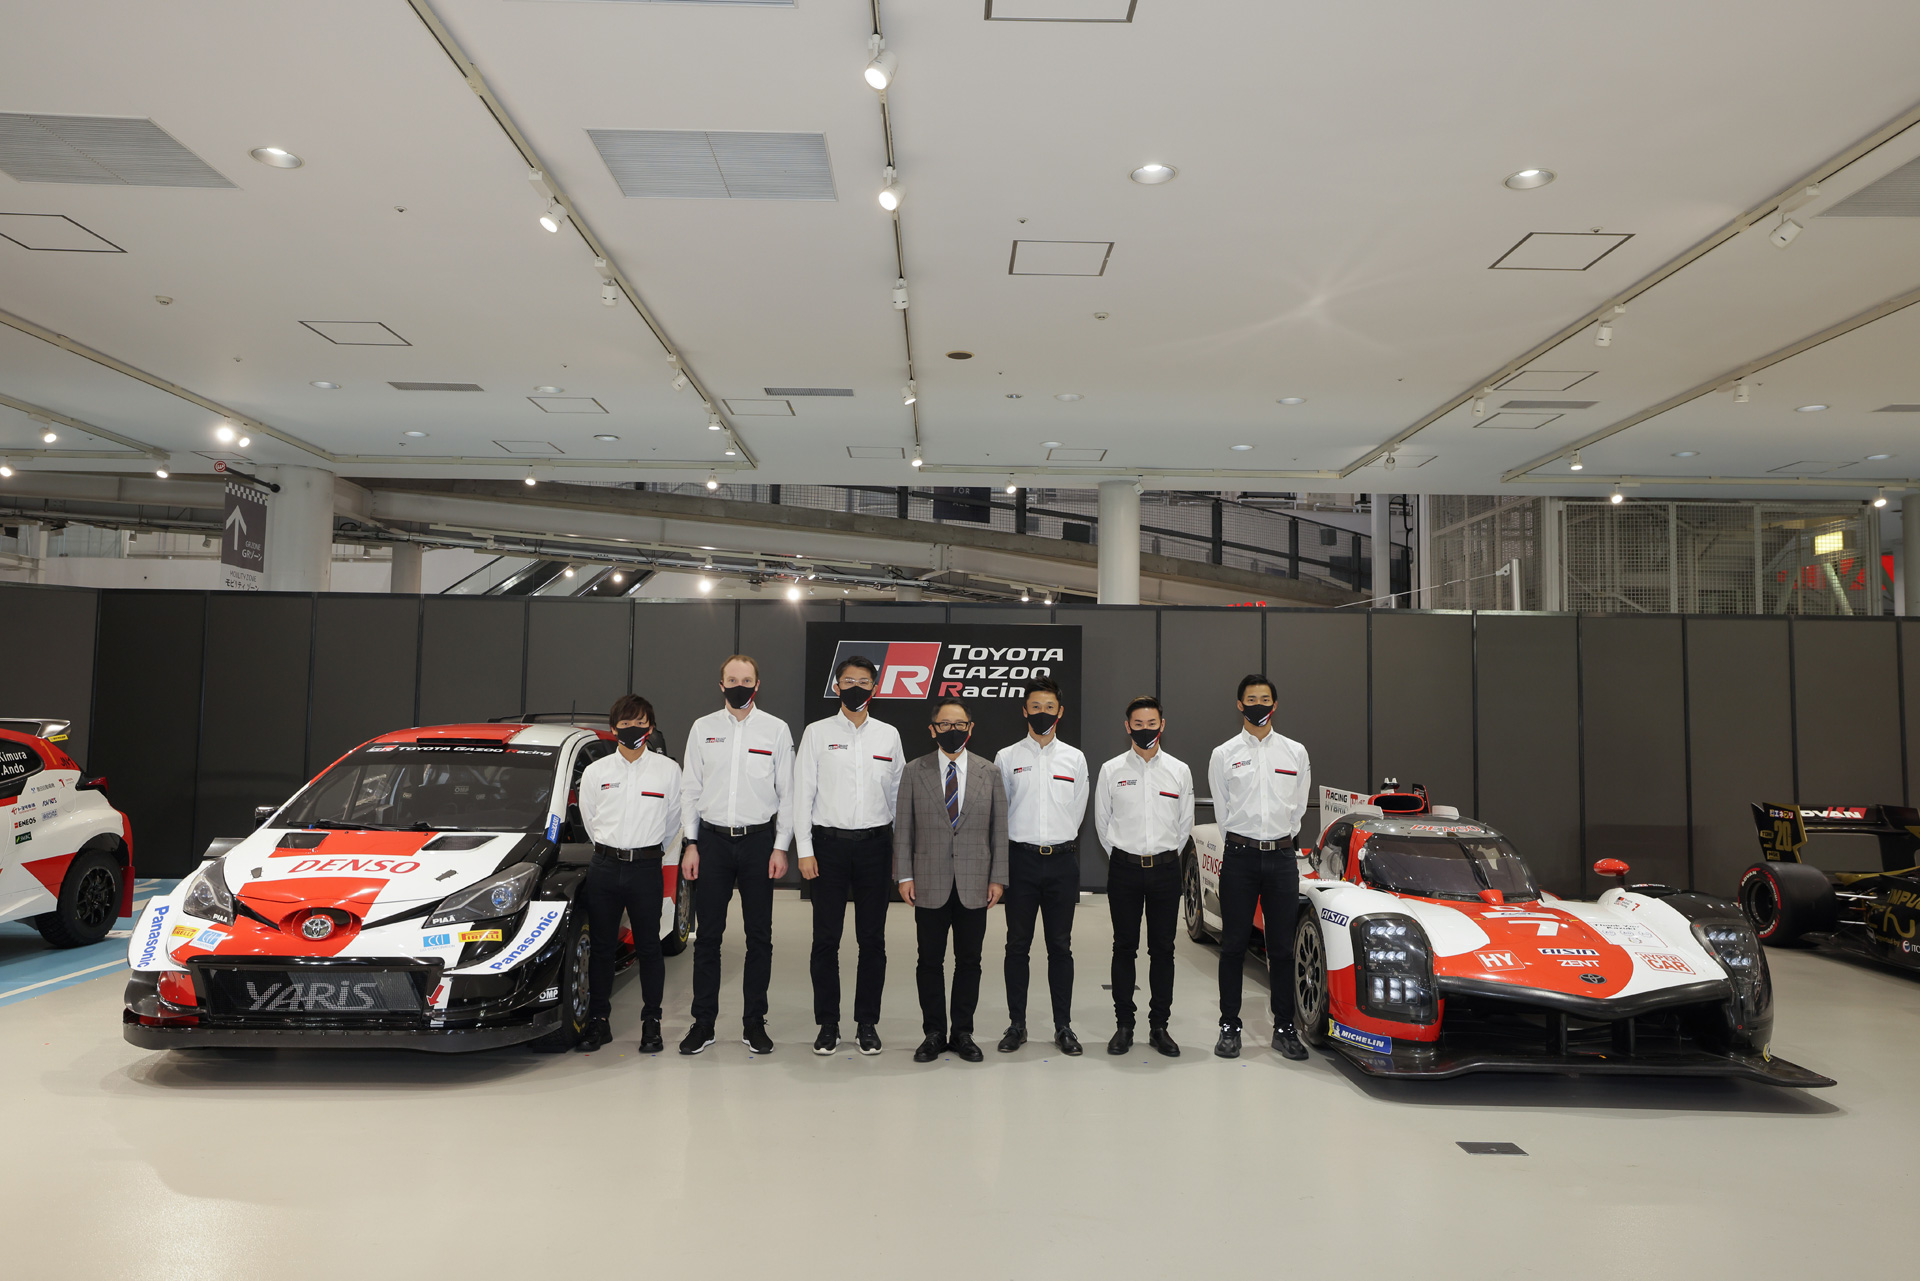 TOYOTA GAZOO Racing announced its 2022 motorsport team setups 